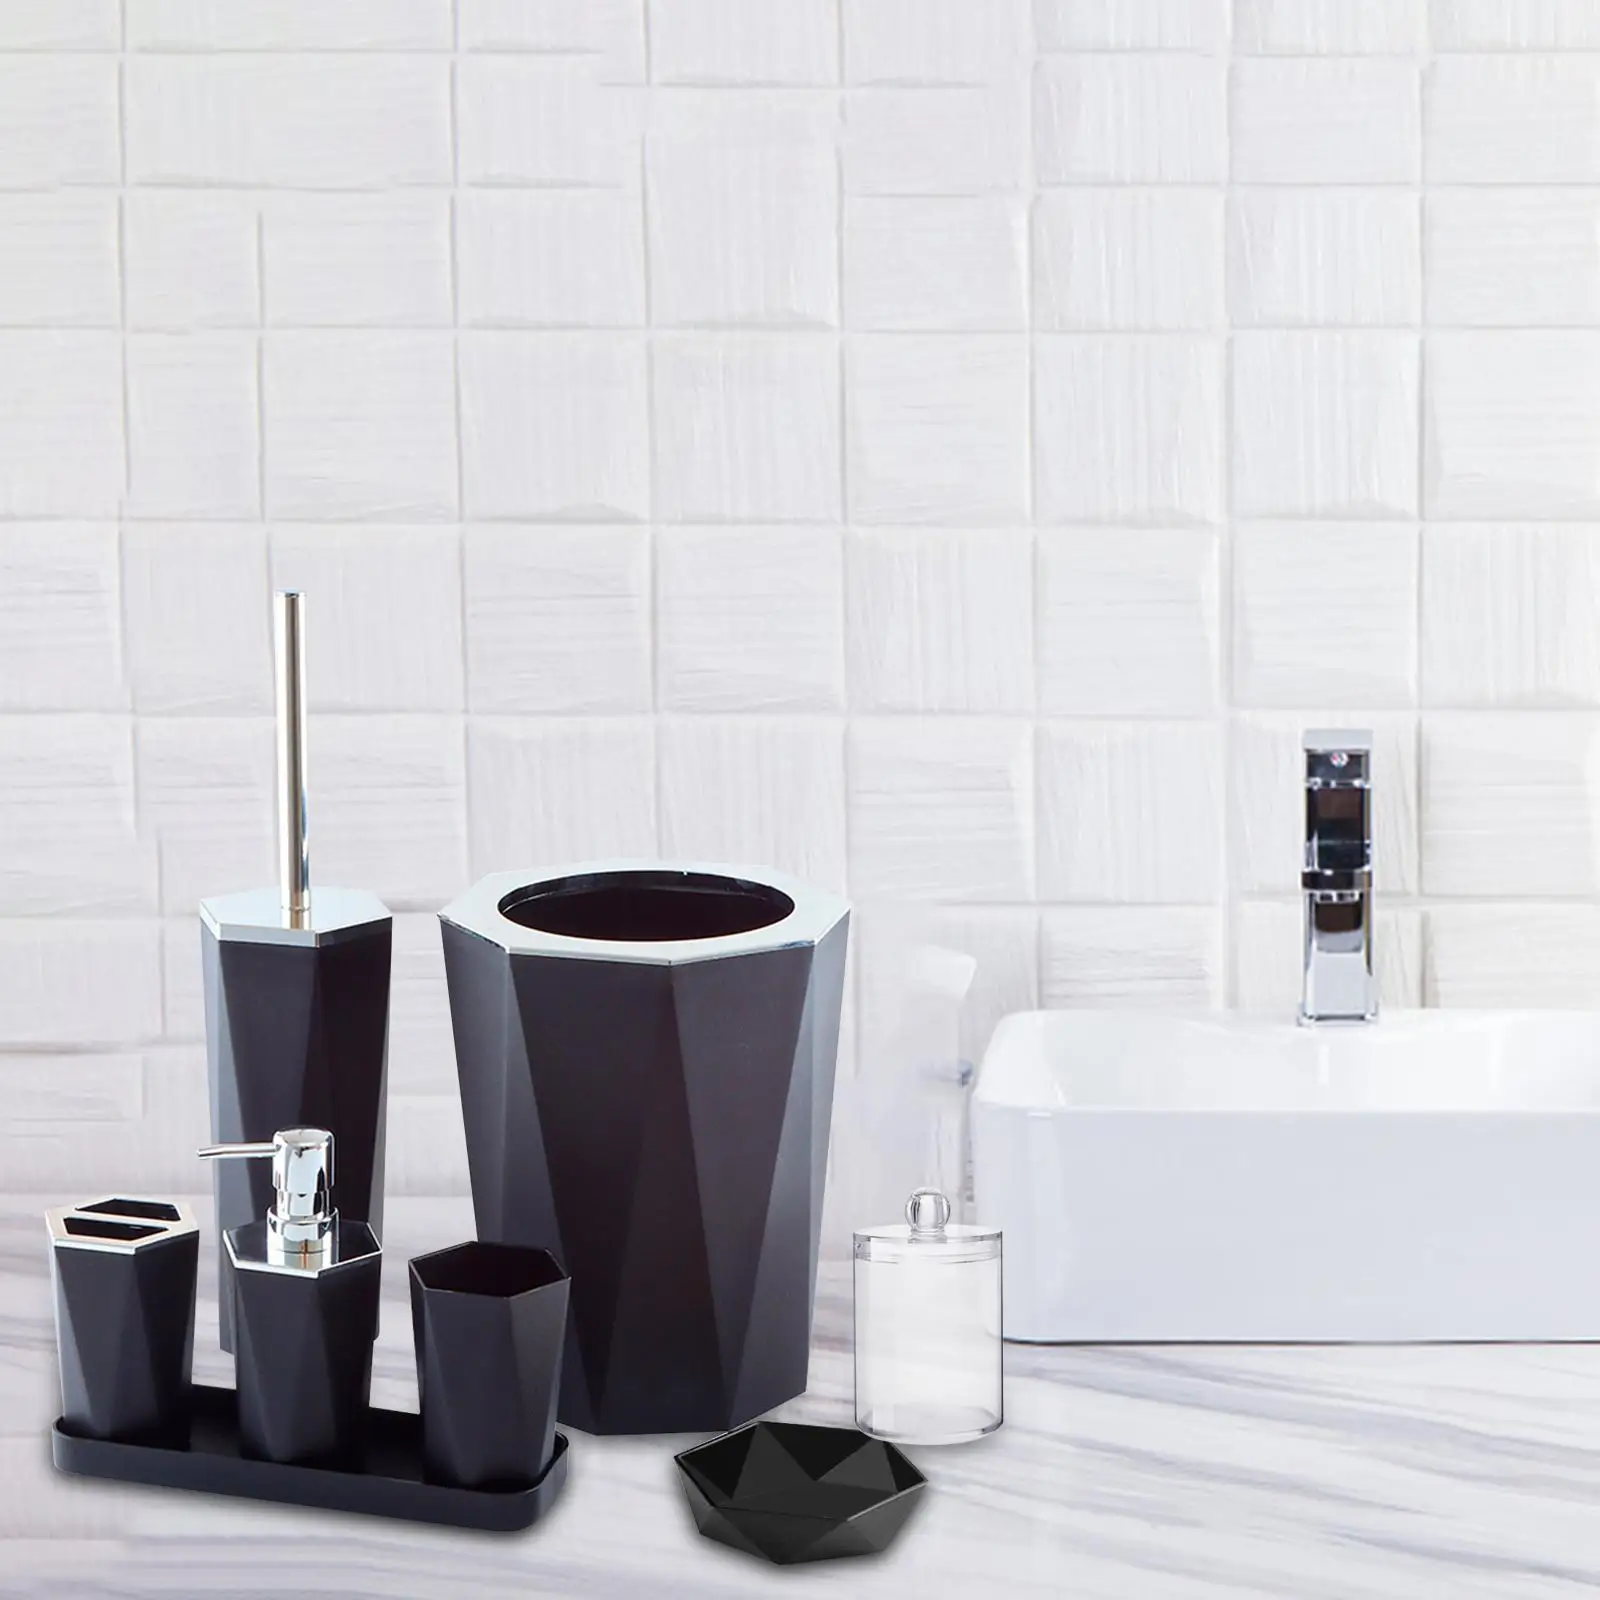 7x Bathroom Accessories Set Garbage Can Toilet Brush Cotton Swab Box for Countertop Bathroom Toilet Apartment Decor